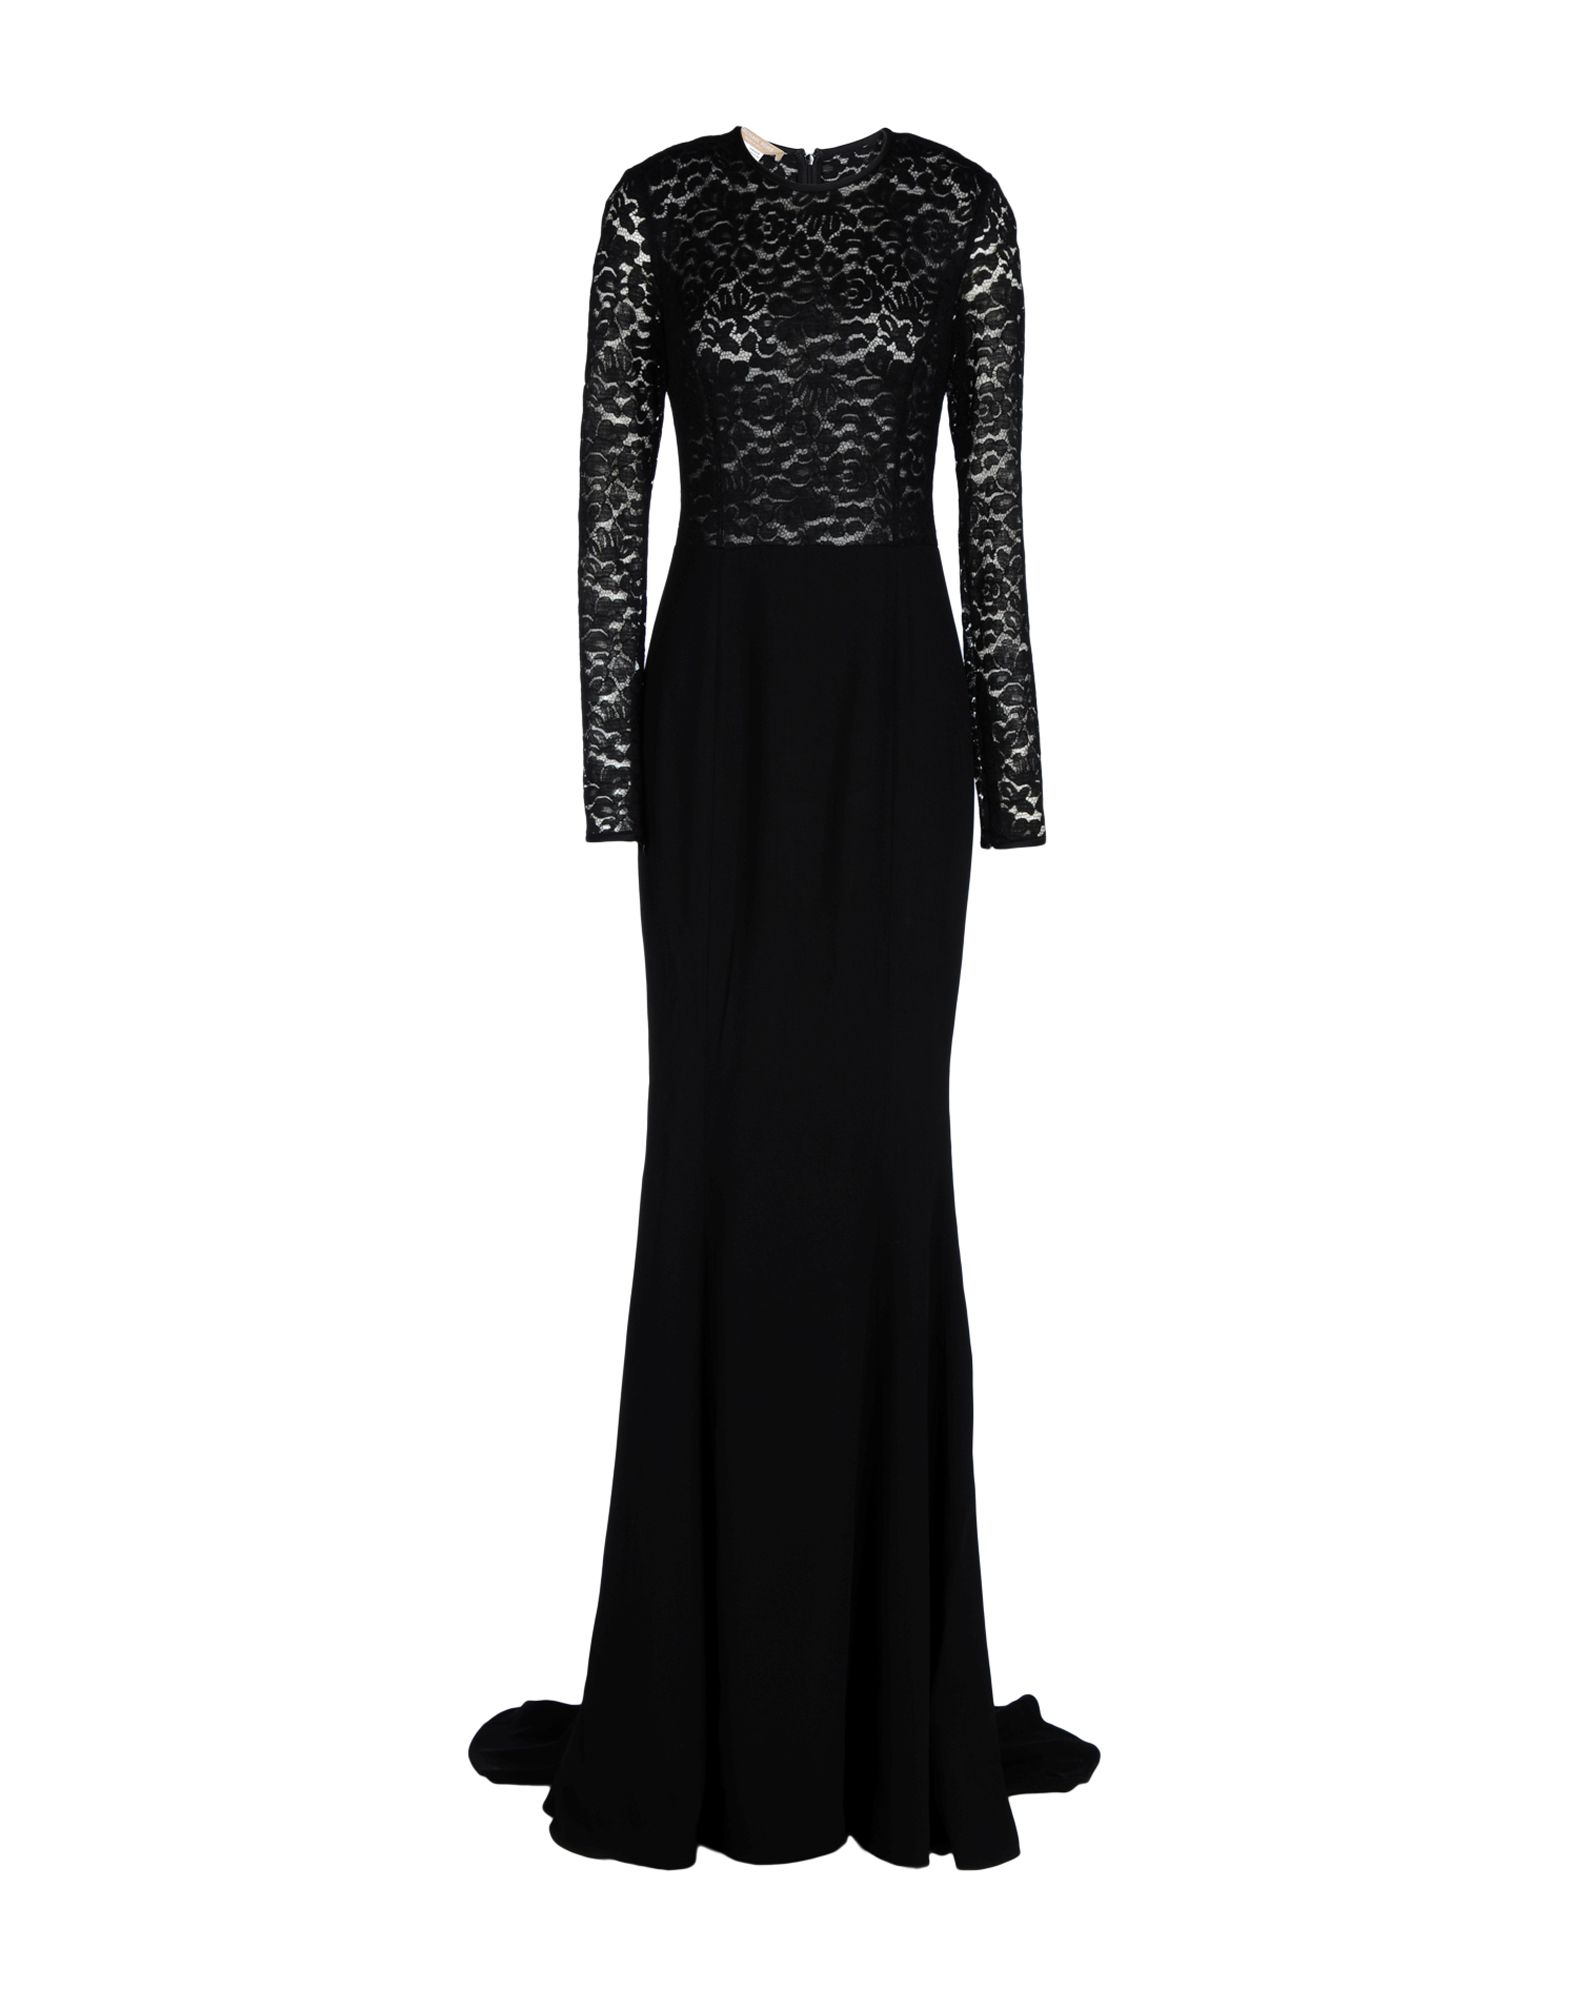 Lyst - Michael Kors Long Dress in Black